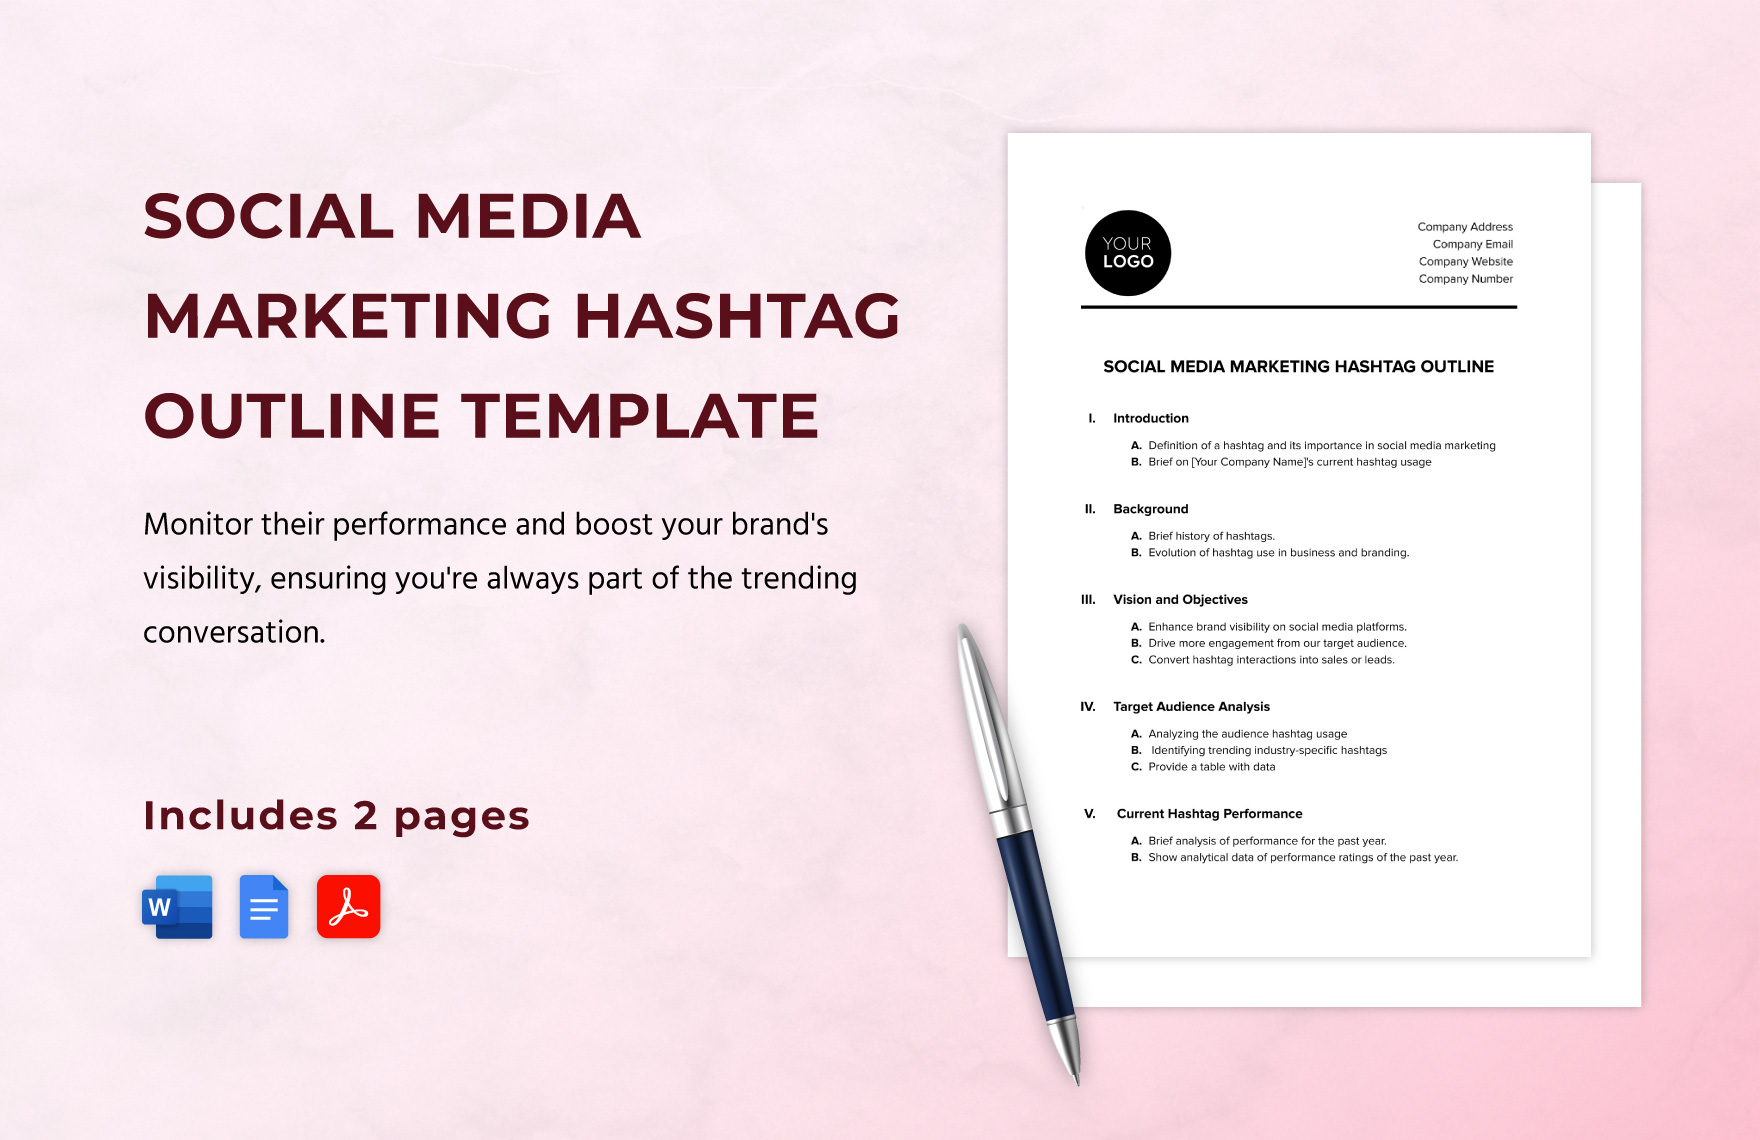 Social Media Marketing Hashtag Outline Template